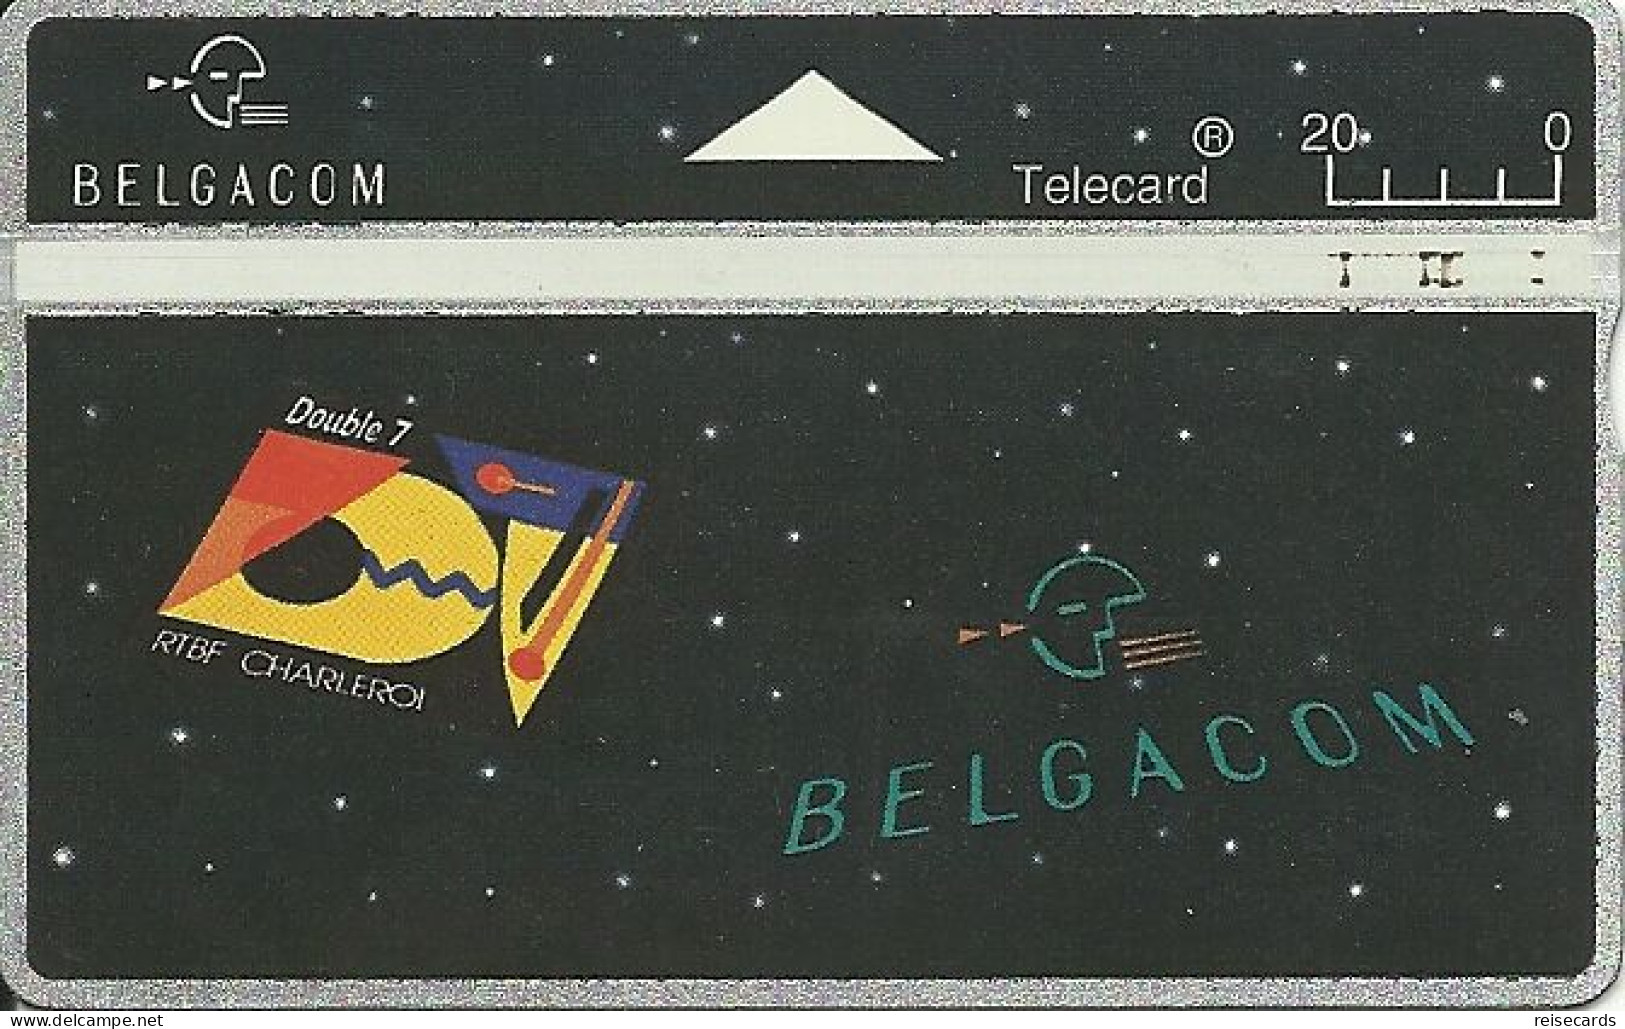 Belgium: Belgacom: 312A Double 7, RTBF Charleroi - Zonder Chip